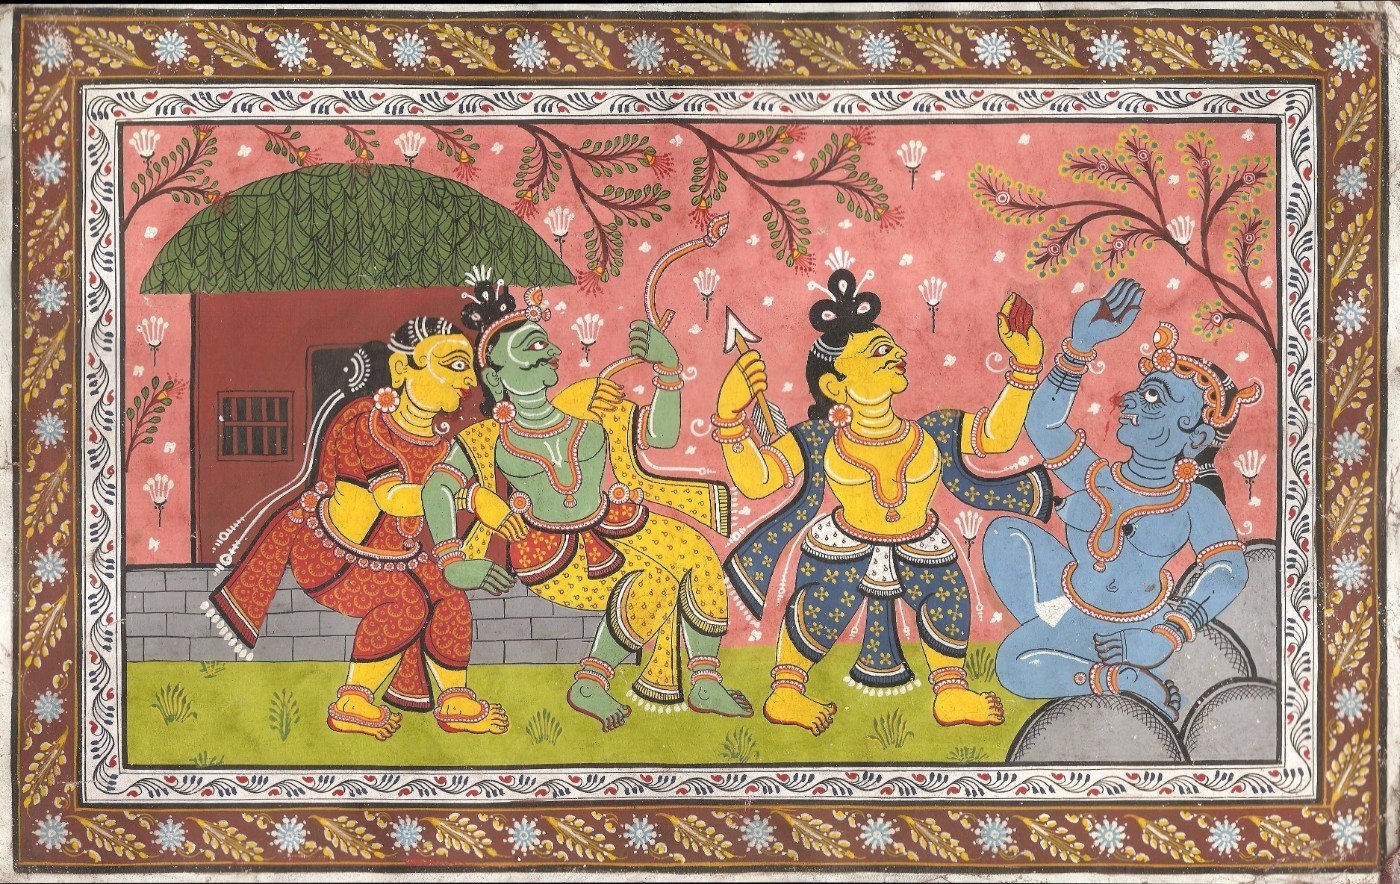 Indian Art from Ramayan - Rajasthani Painting - Ramayana Itihasas ...